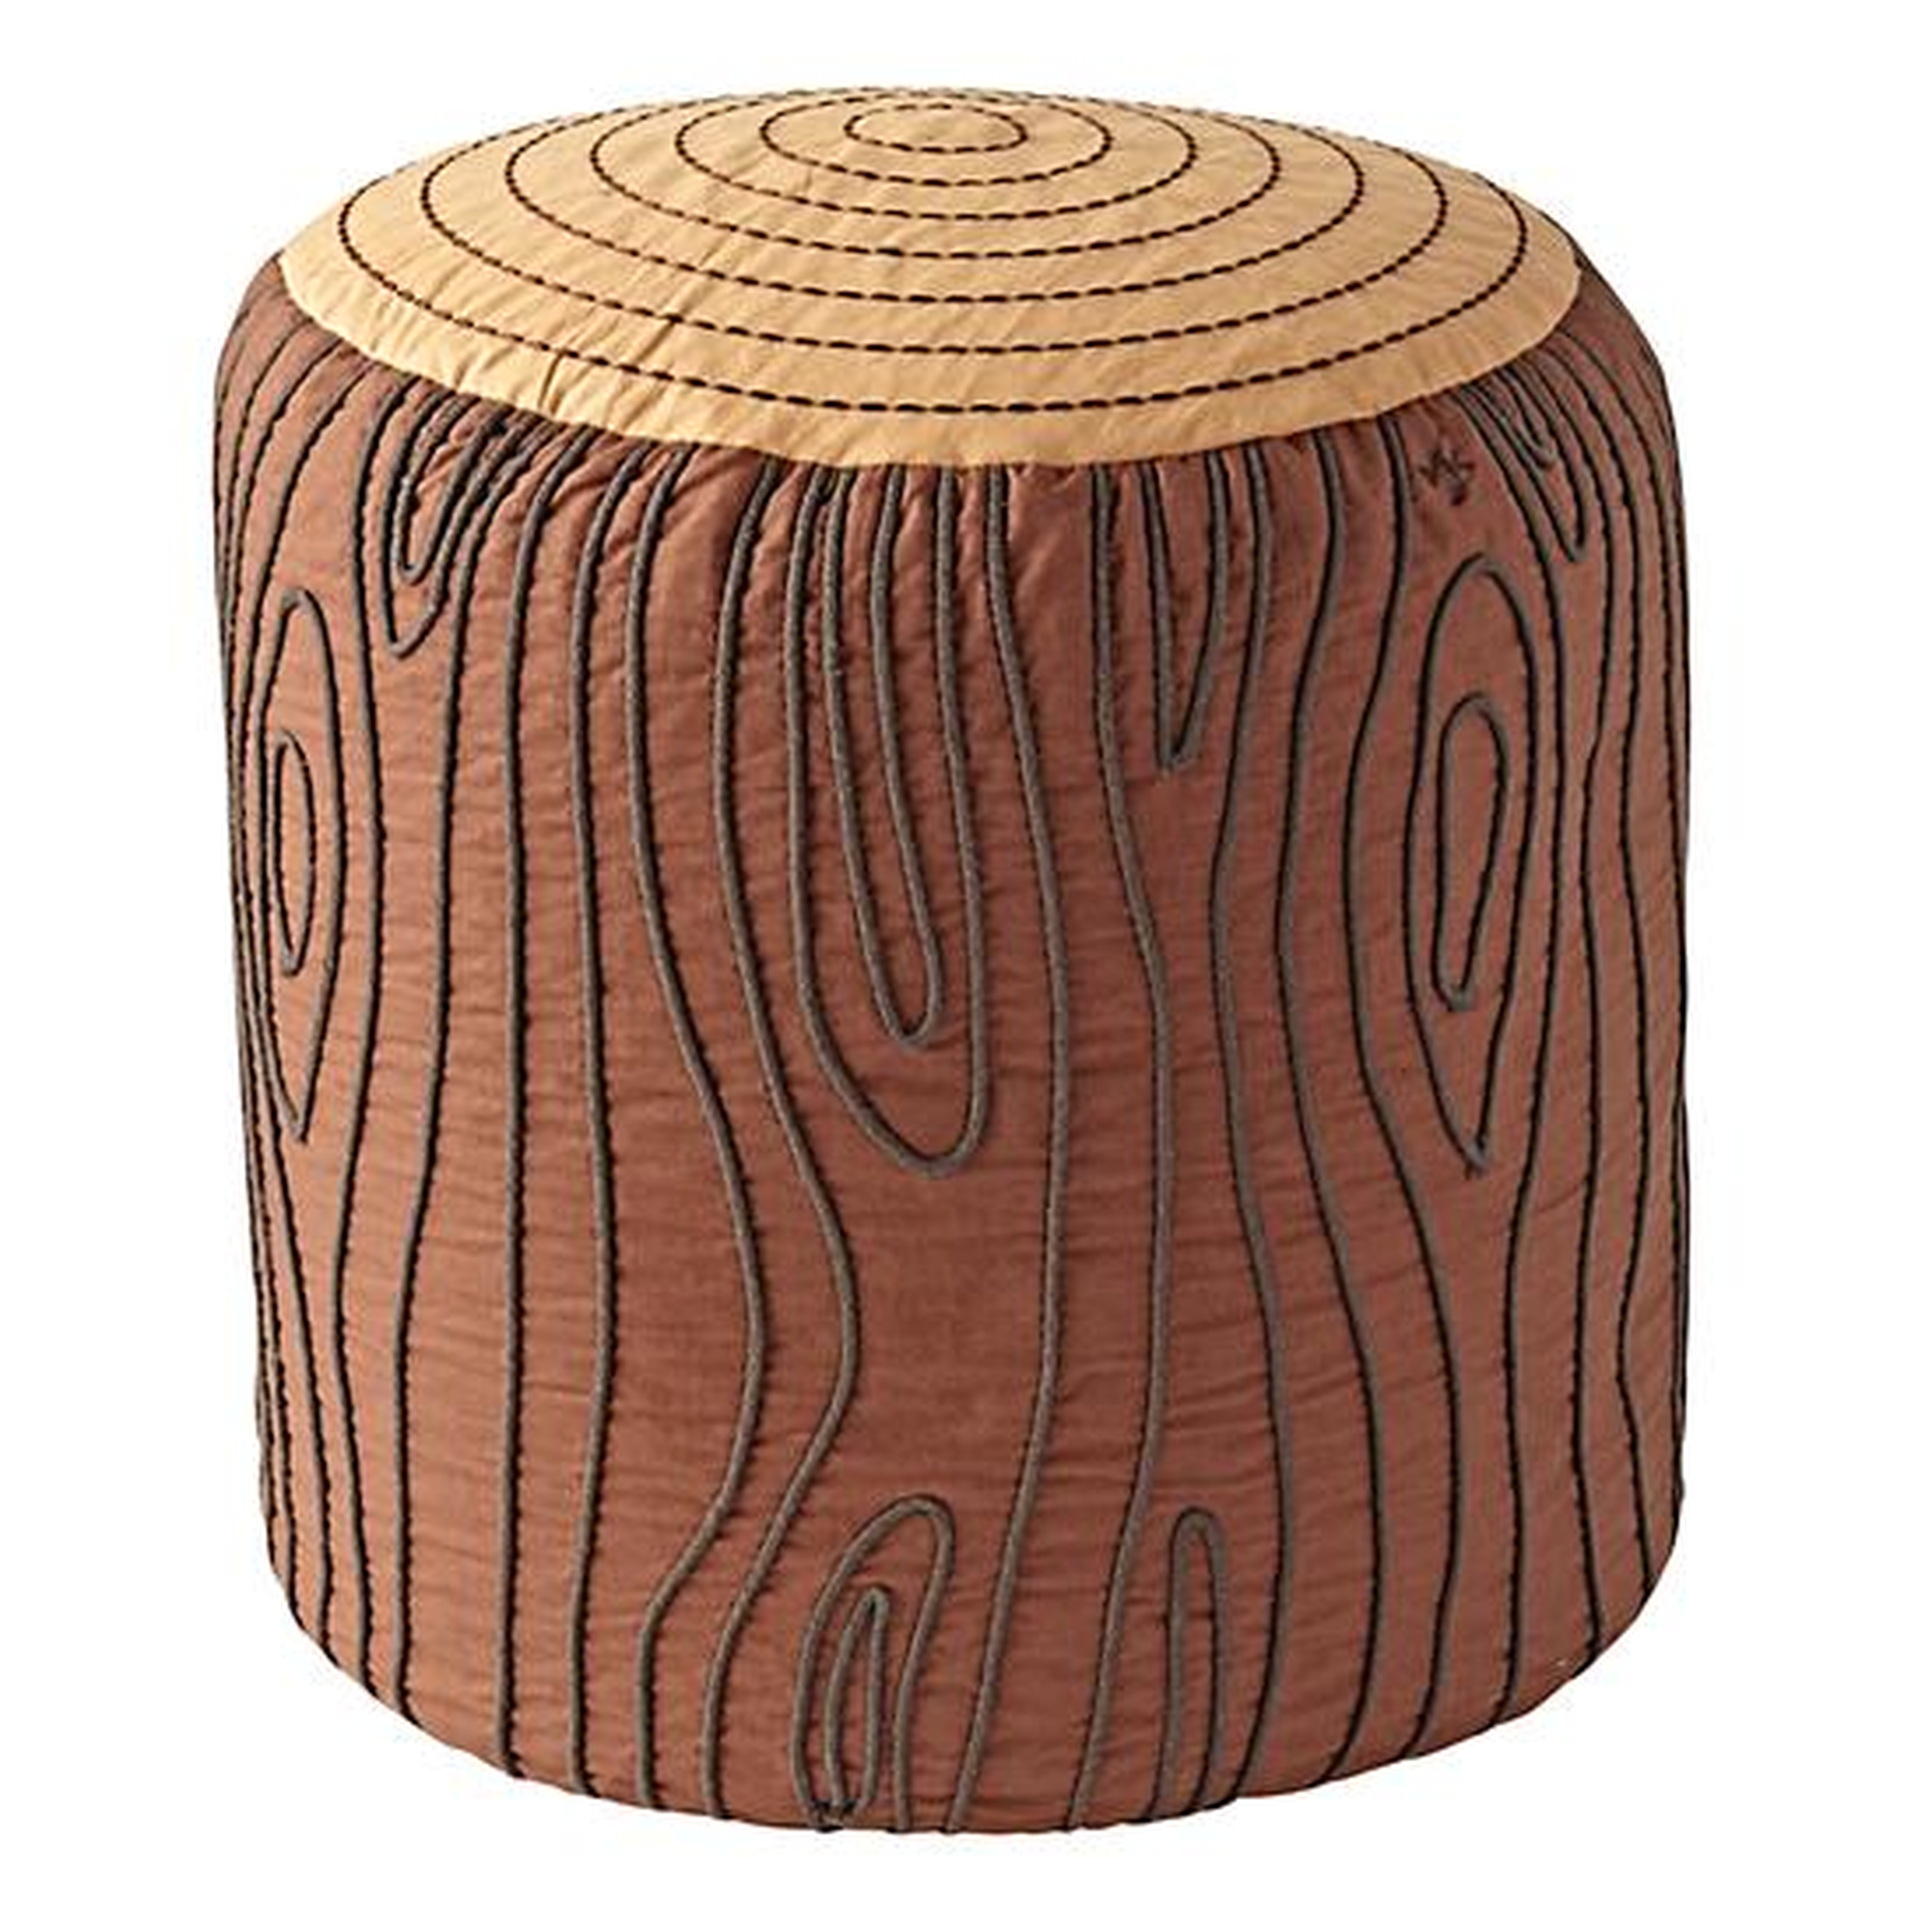 Log Seat - Crate and Barrel